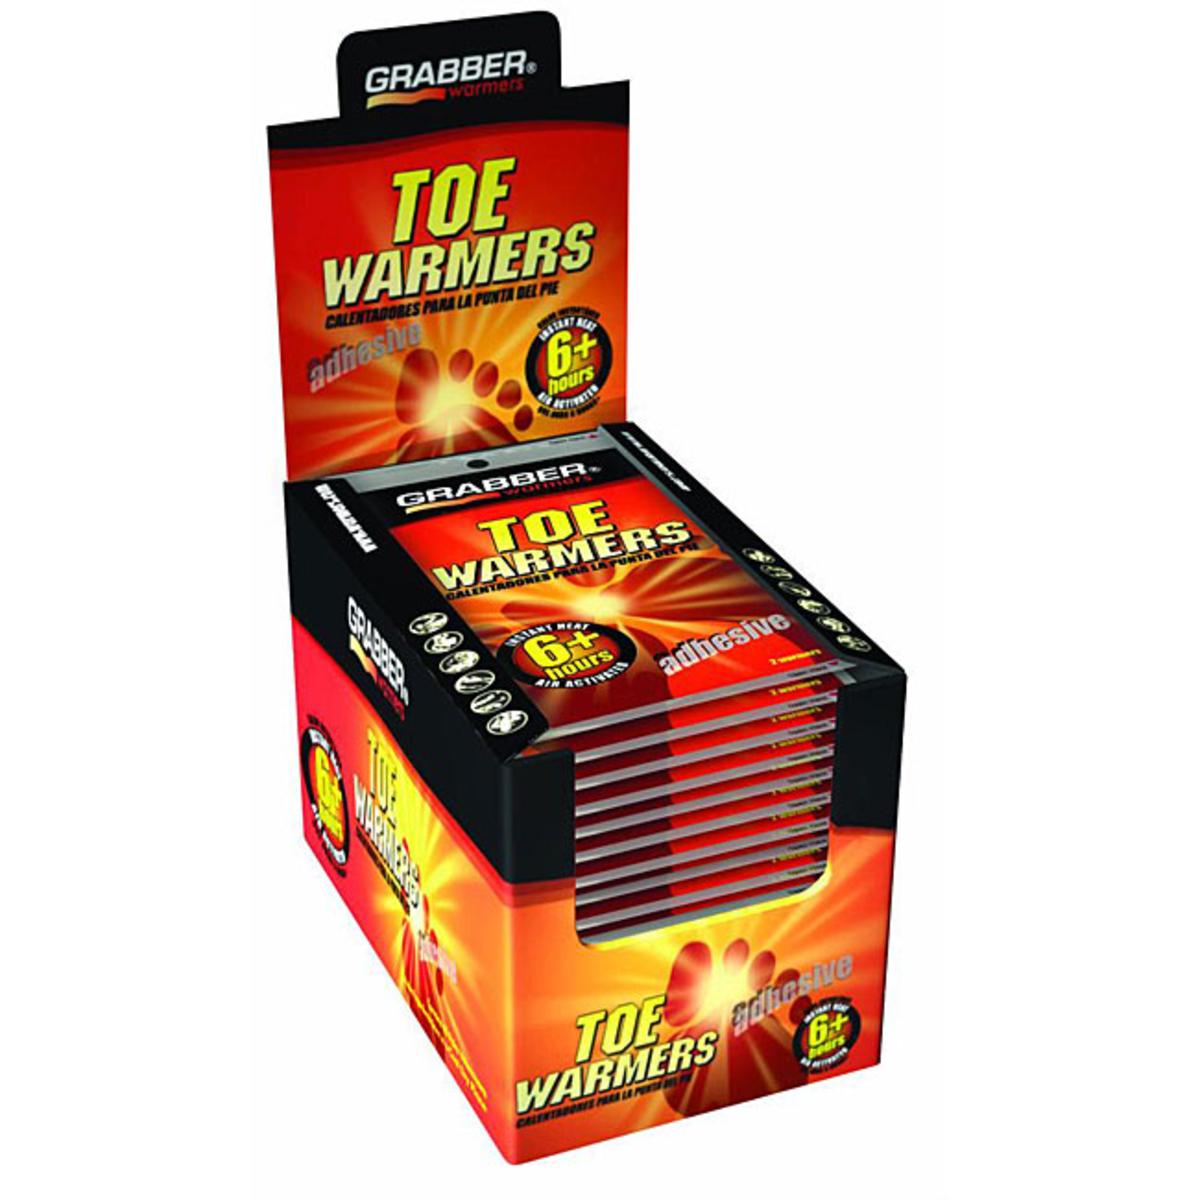 Grabber Warmers 6+ Hour Adhesive Toe Warmers - 40 Pair Box